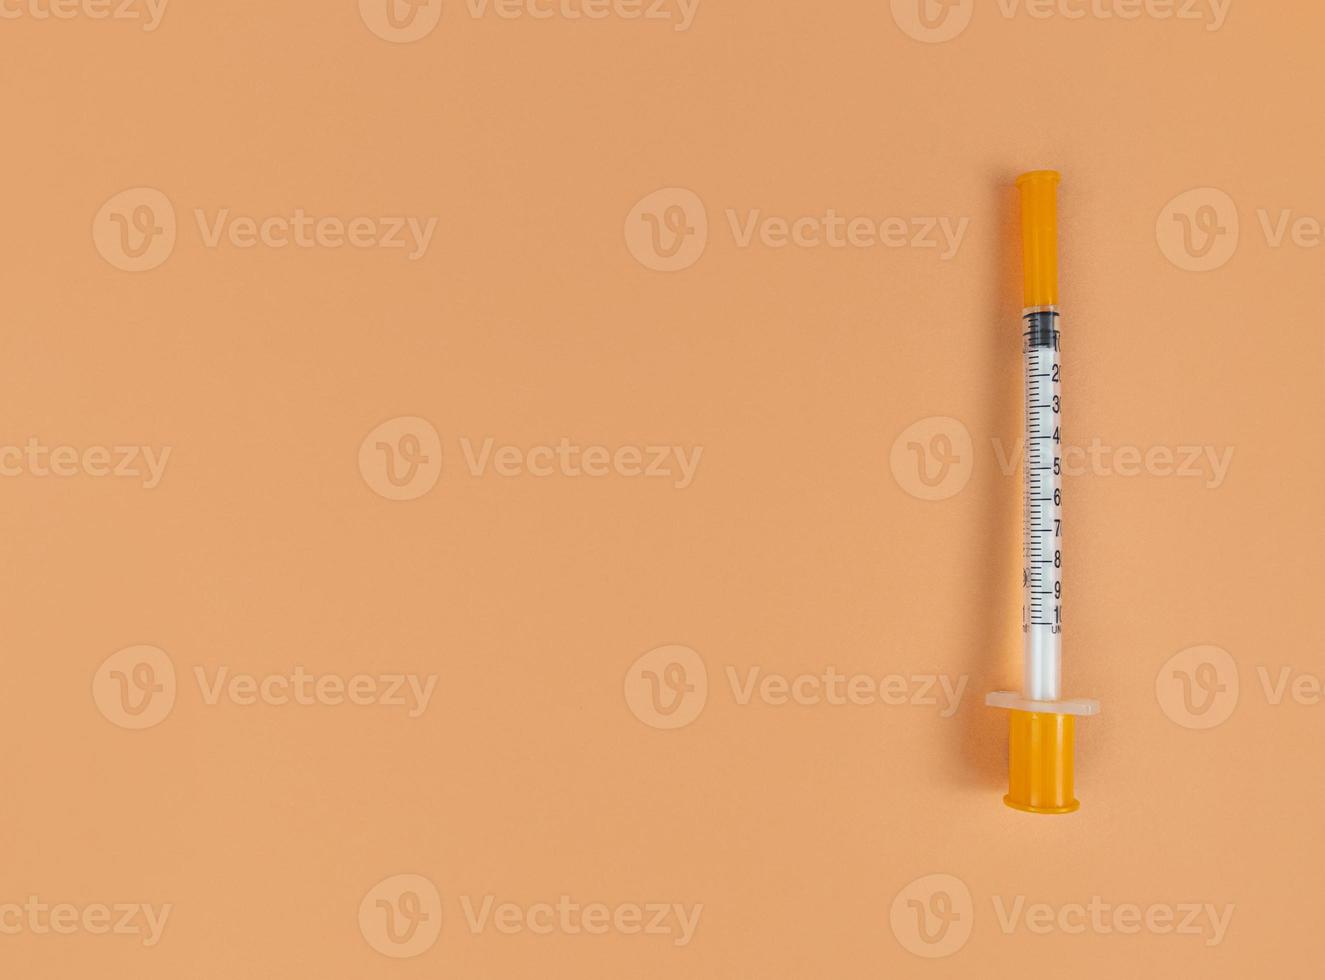 Insulin syringe on orange background with copy space photo